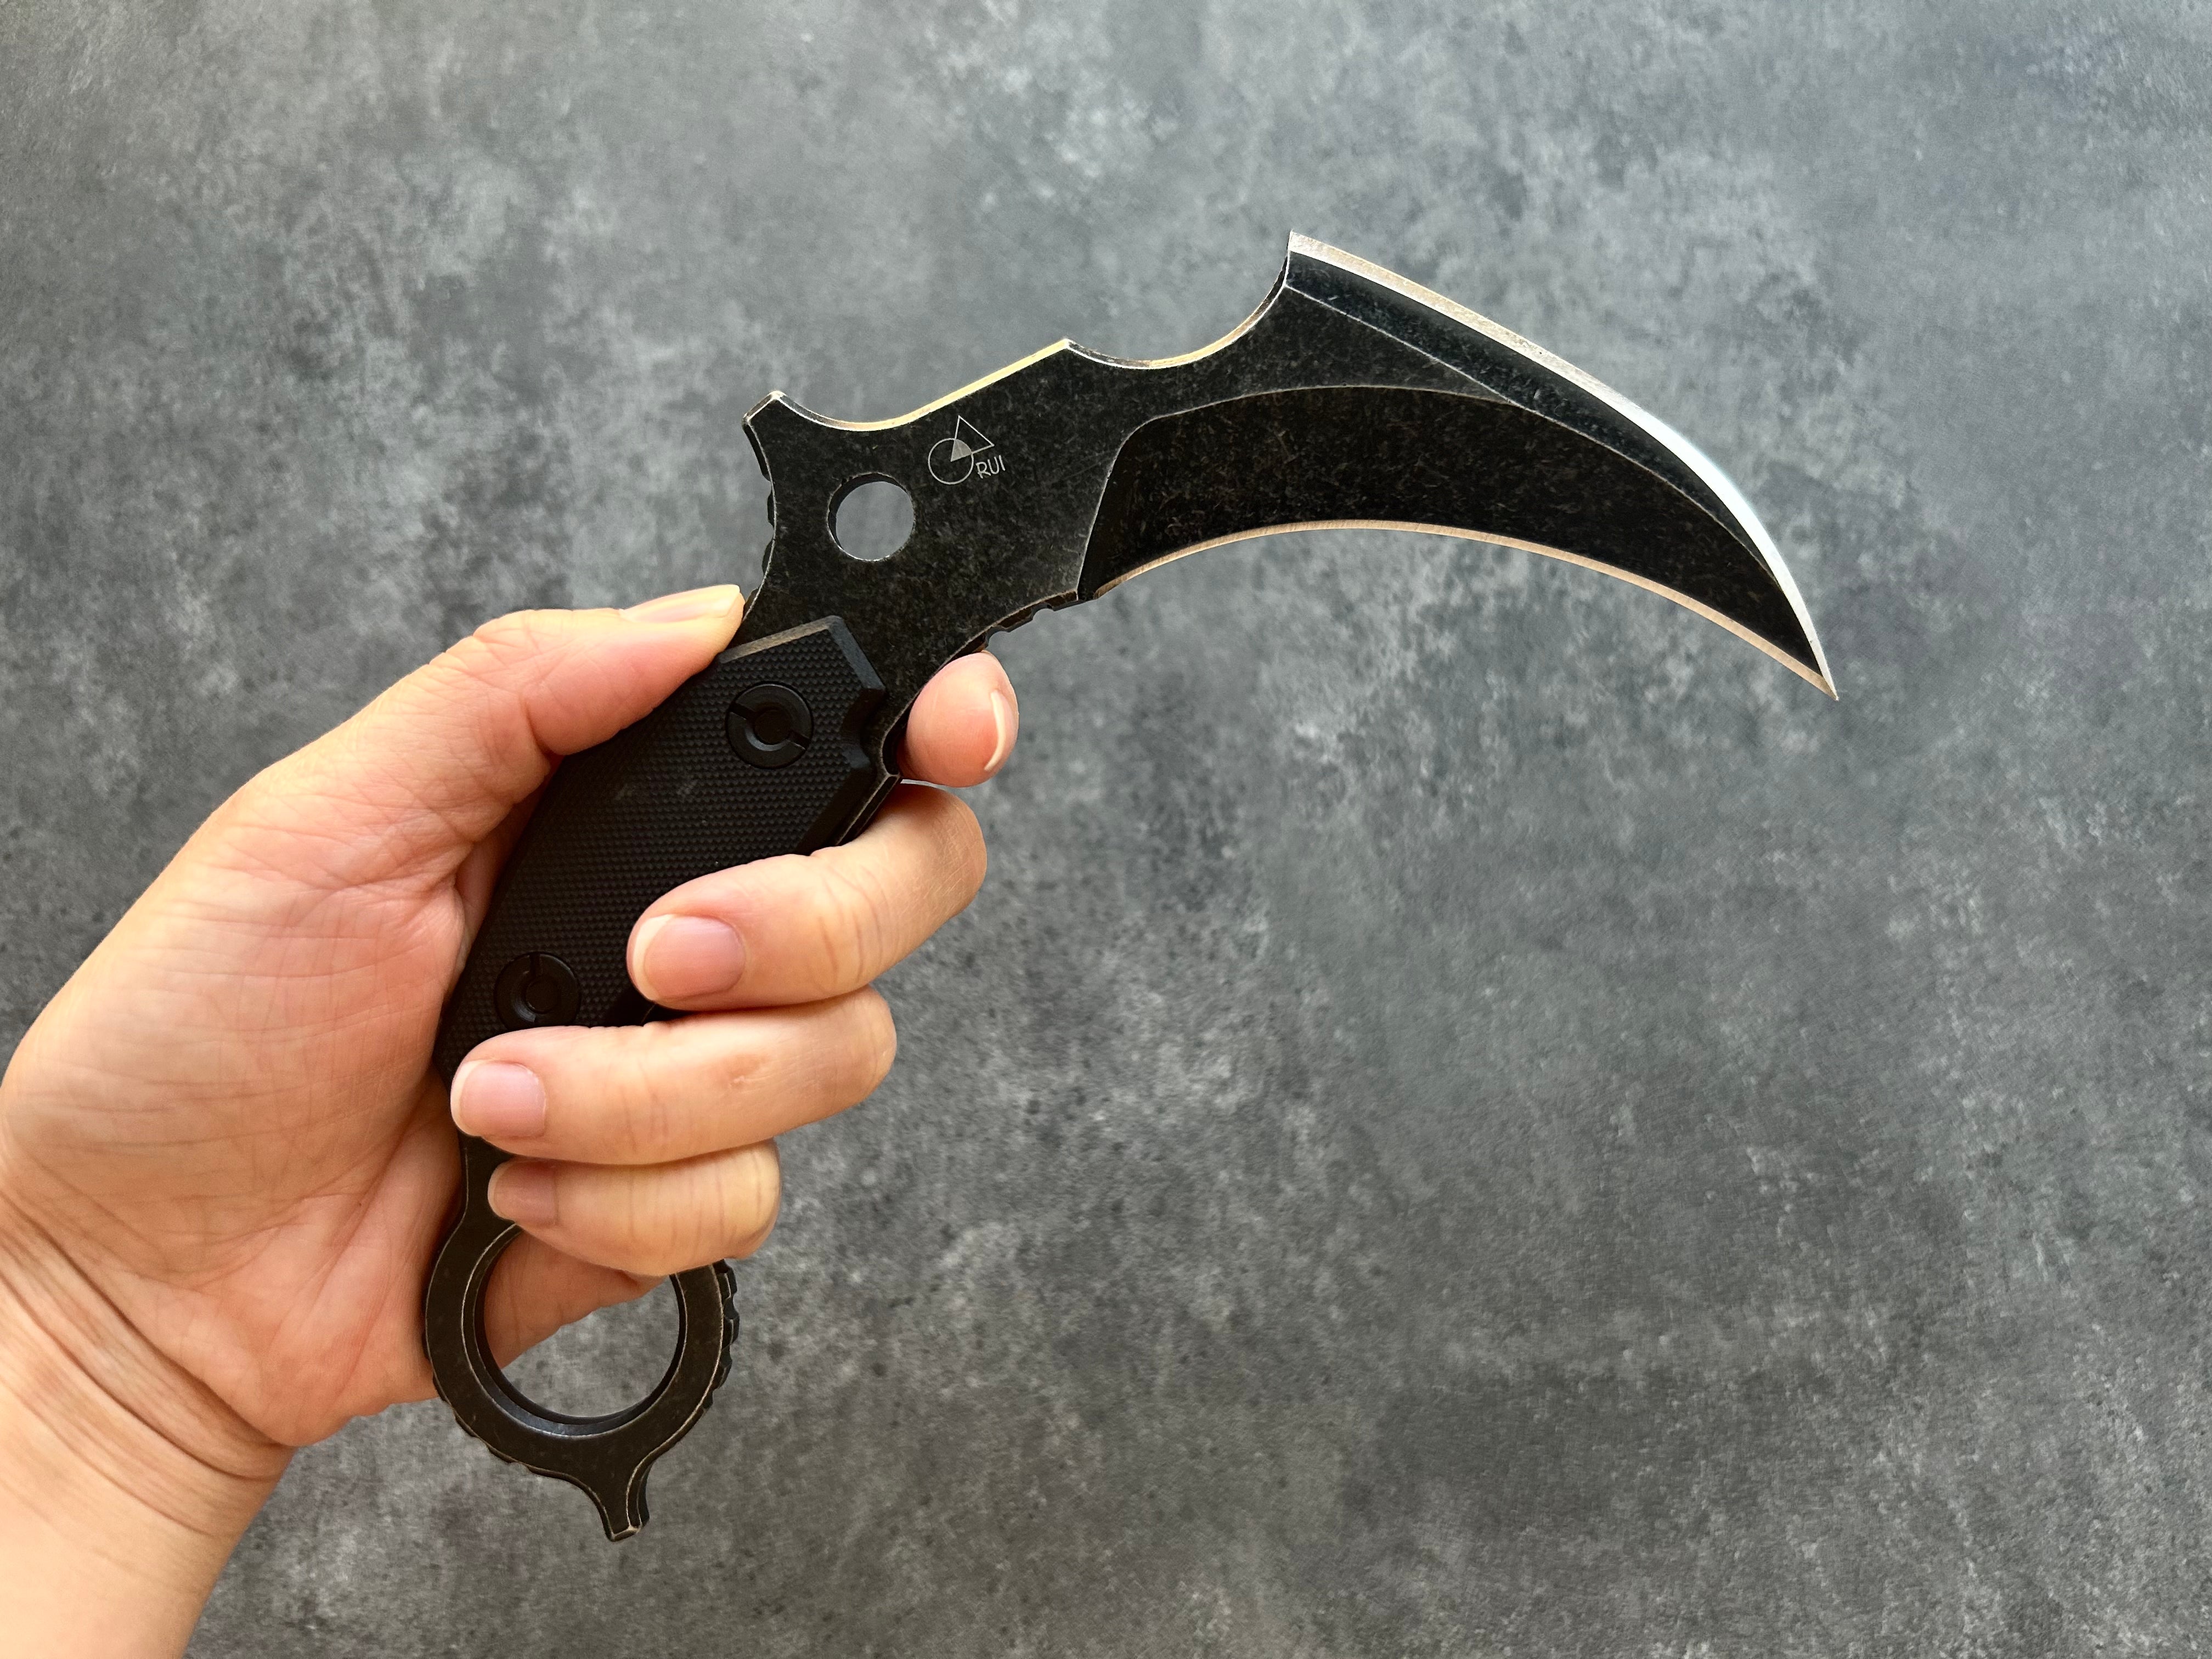 KARAM-Eagle Outdoor Survival Knife FREE SHIPPING